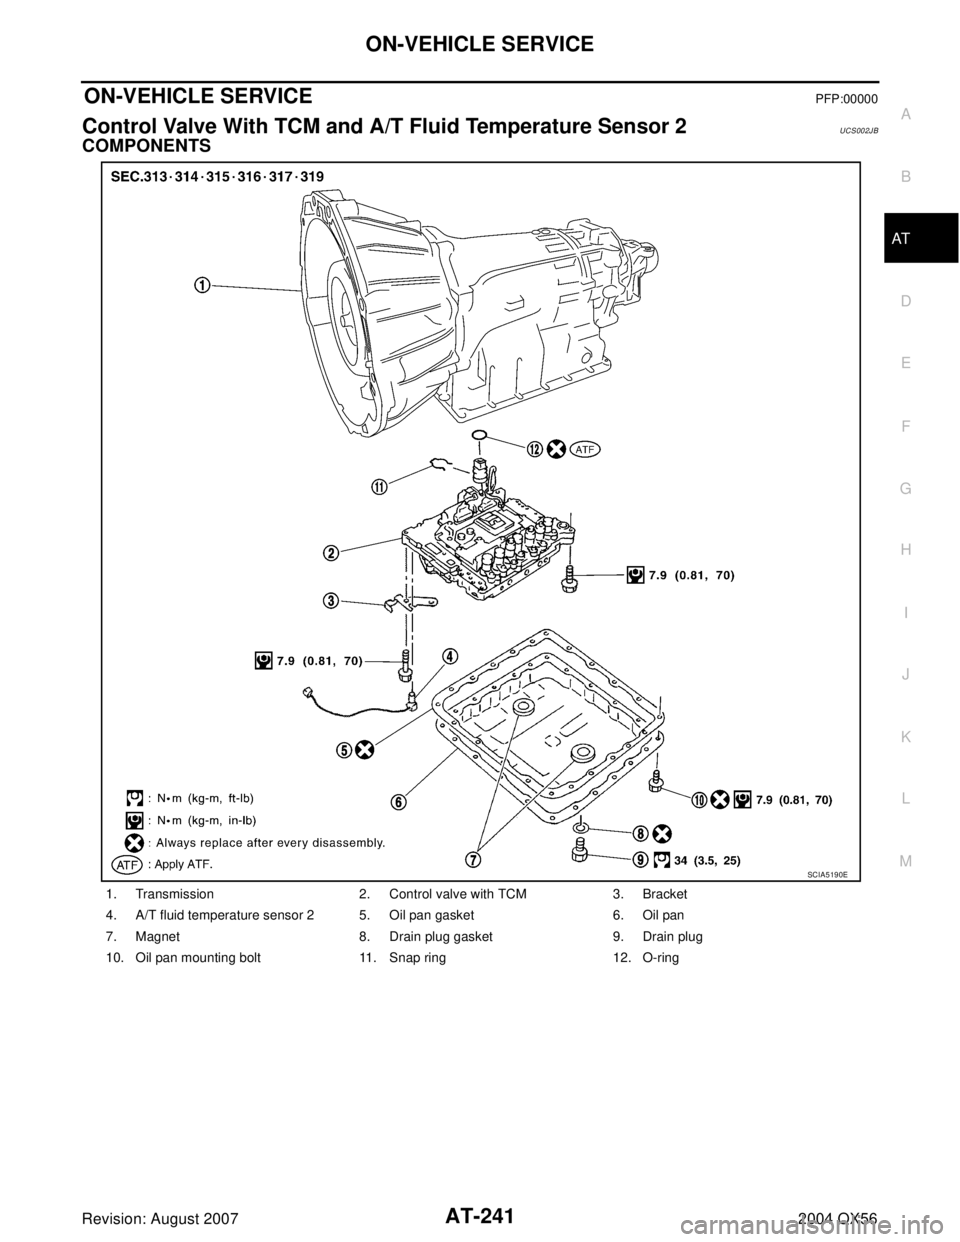 INFINITI QX56 2004  Factory Service Manual ON-VEHICLE SERVICE
AT-241
D
E
F
G
H
I
J
K
L
MA
B
AT
Revision: August 20072004 QX56
ON-VEHICLE SERVICEPFP:00000
Control Valve With TCM and A/T Fluid Temperature Sensor 2UCS002J B
COMPONENTS
1. Transmis